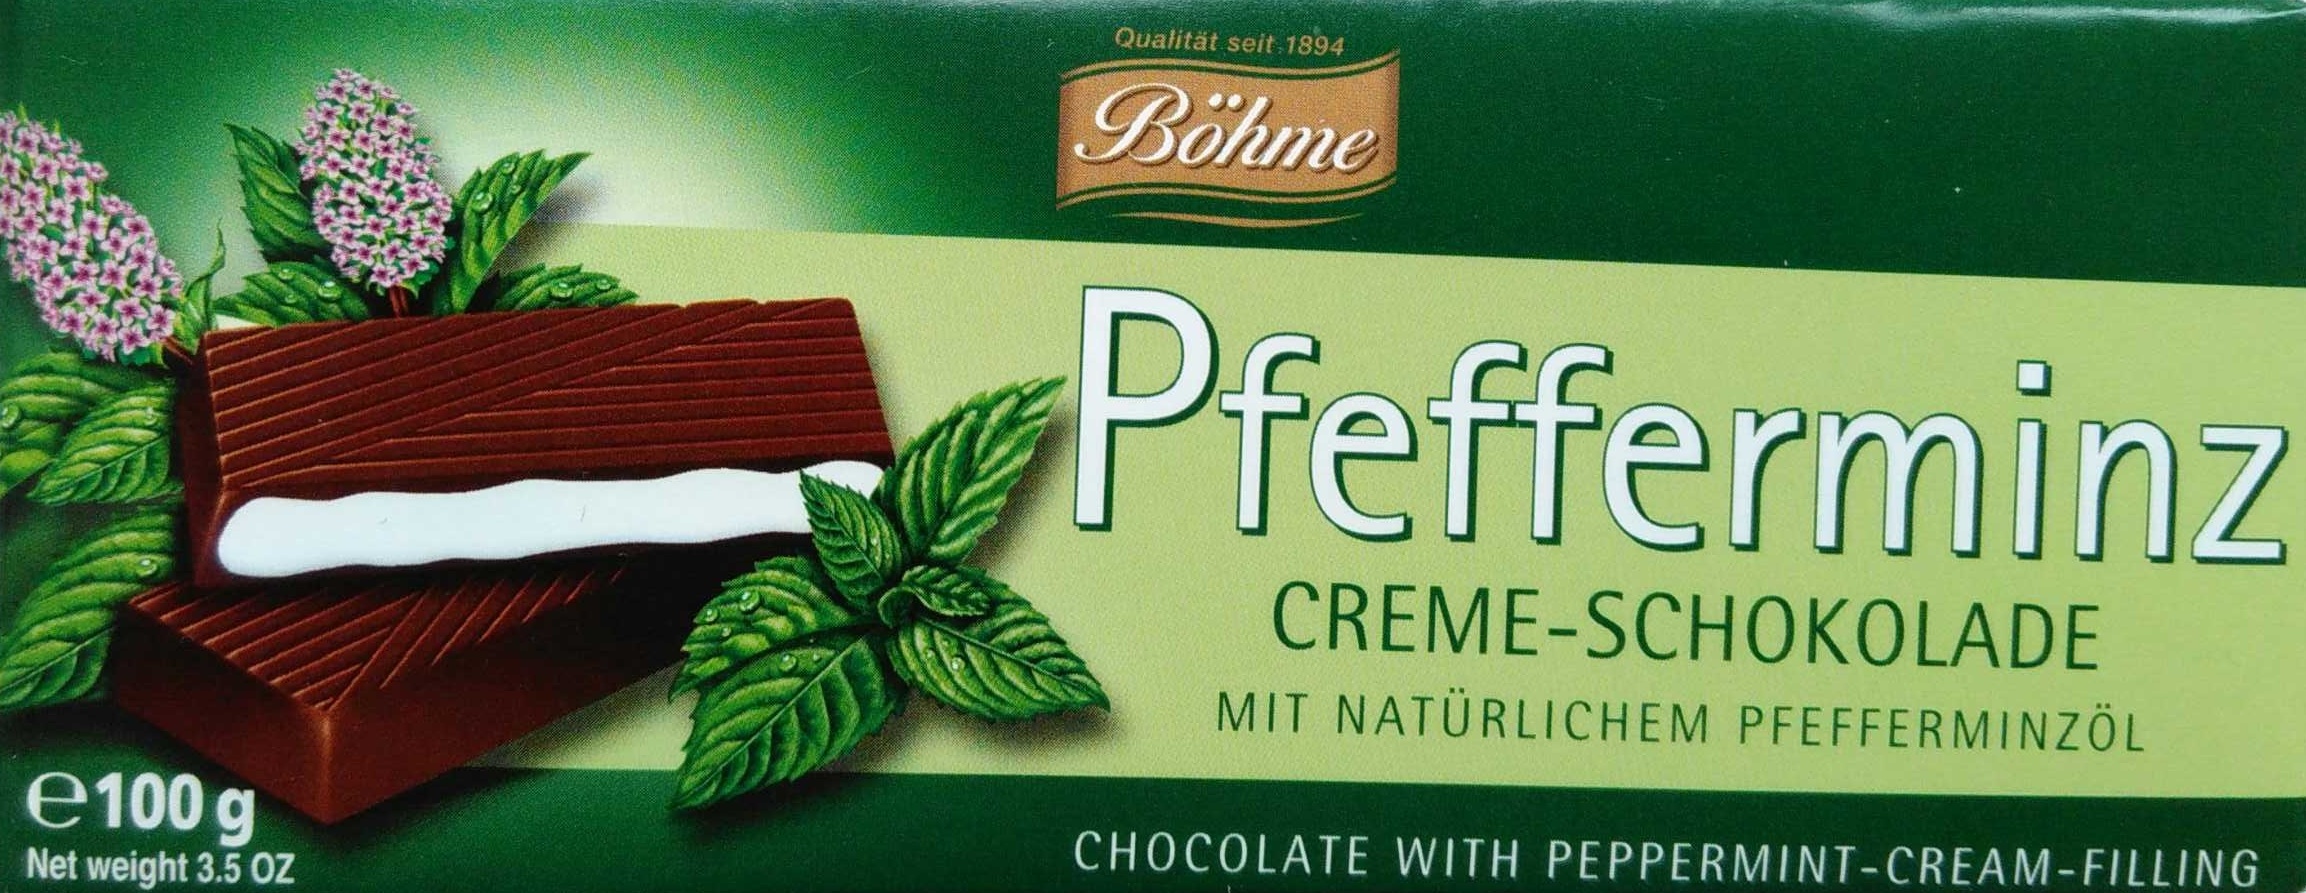 5x Pfefferminz Creme Schokolade Böhme 